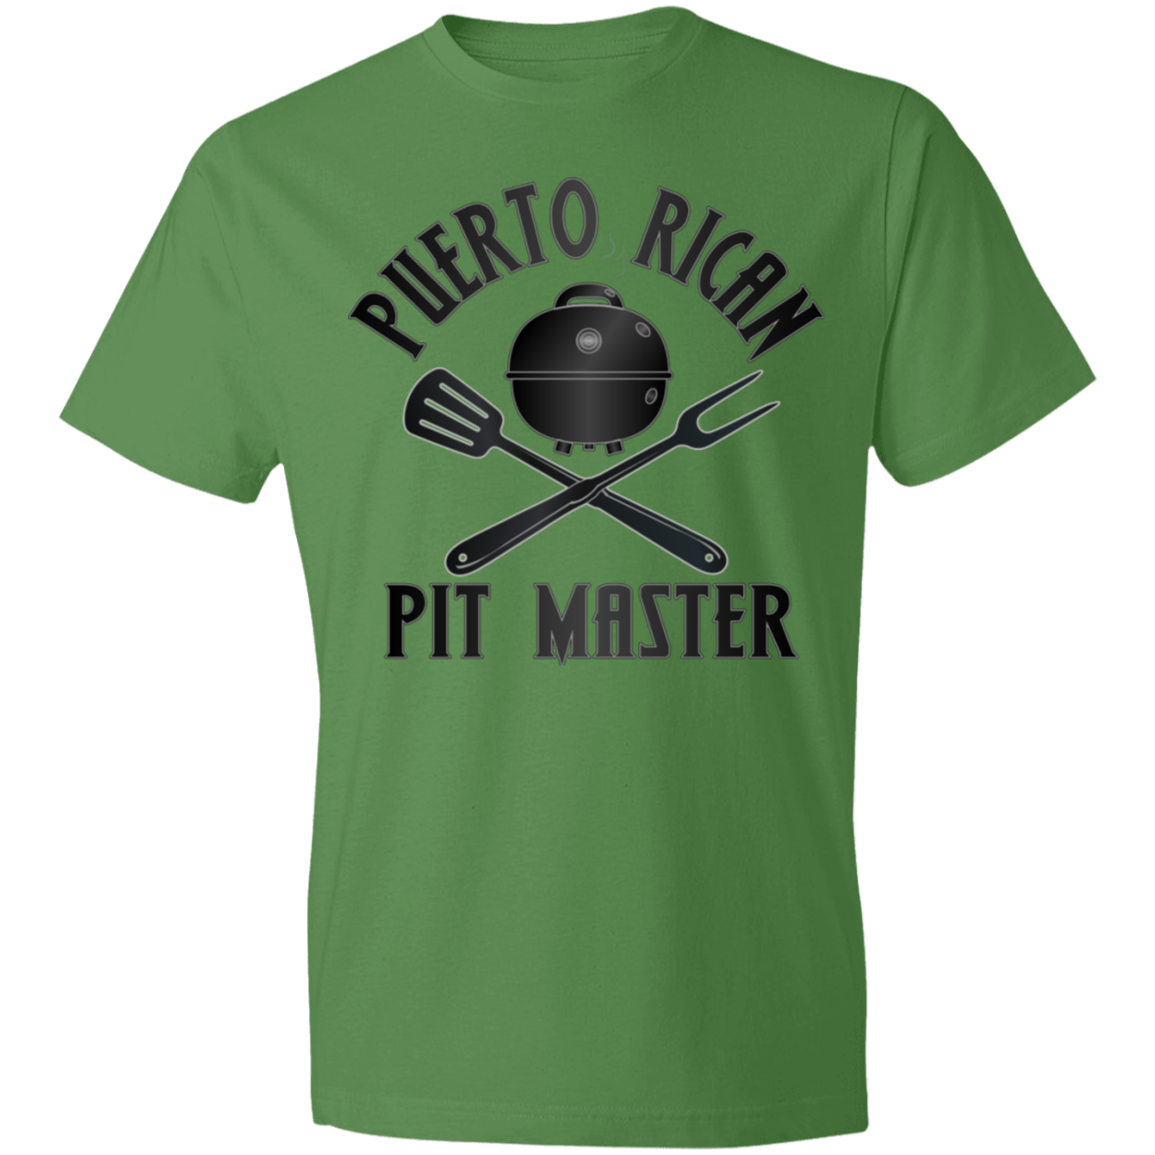 Puerto Rican Pit Master Lightweight T-Shirt 4.5 oz - Puerto Rican Pride